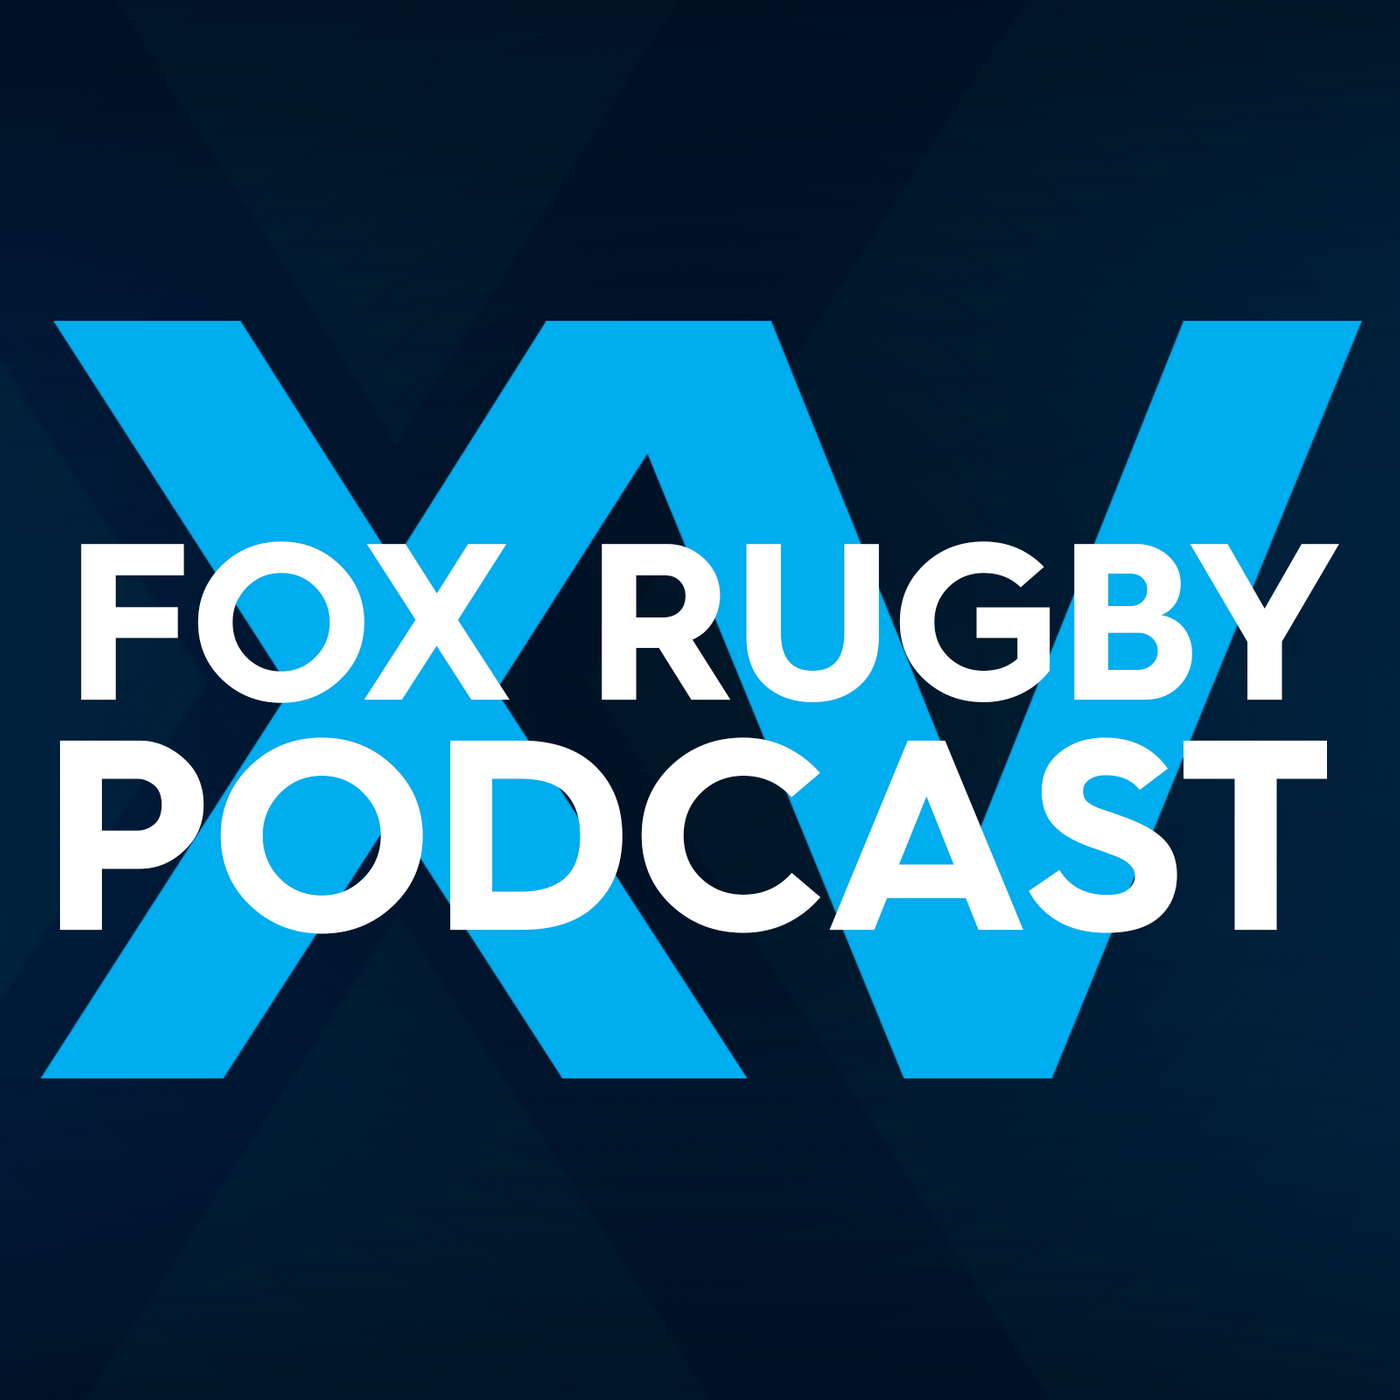 Lions series decider, Super Rugby returns